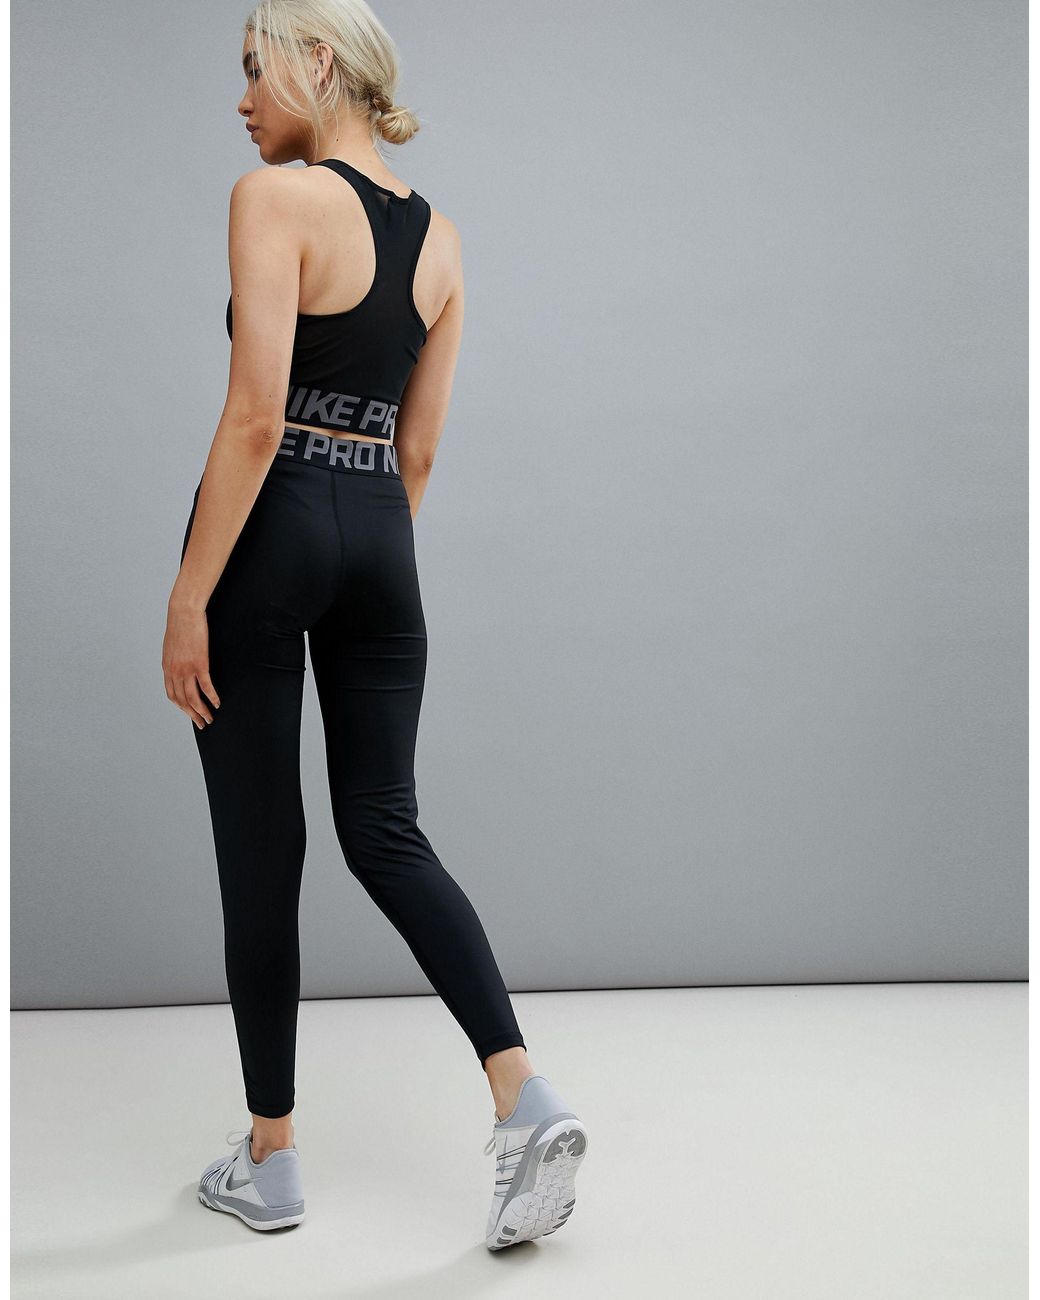 Nike Nike – pro training – e leggings mit überkreuztem design in Schwarz